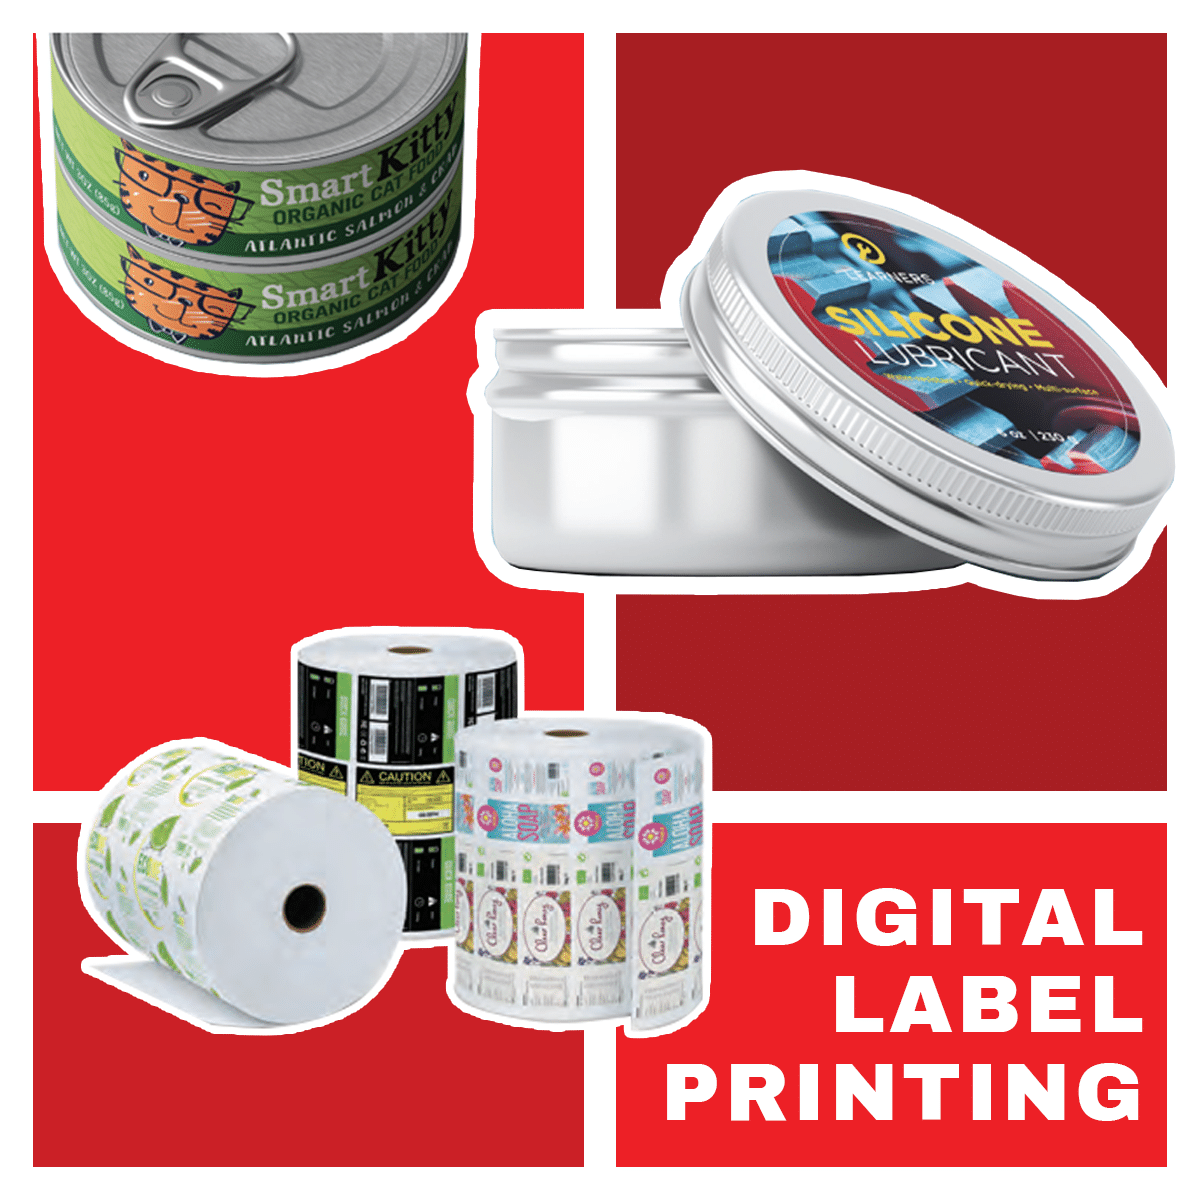 Production_Digital Label Printing